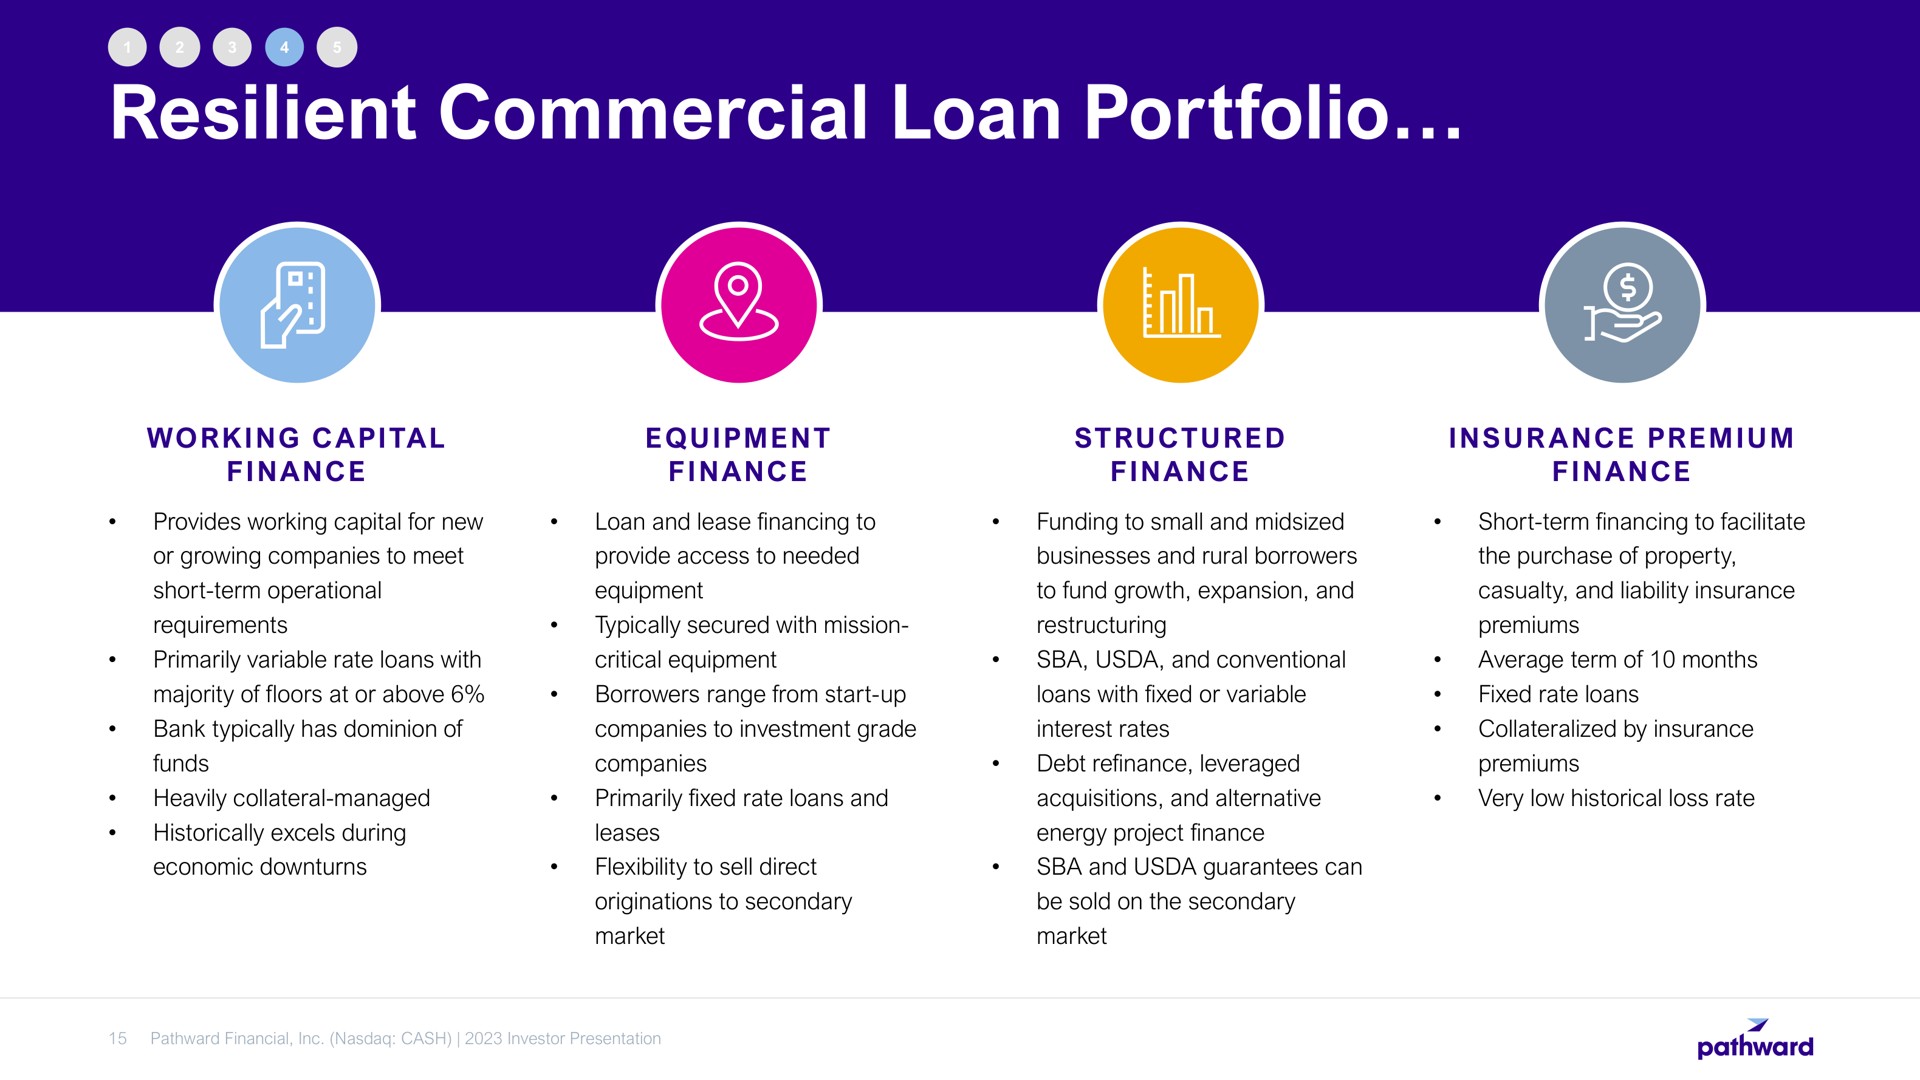 resilient commercial loan portfolio | Pathward Financial